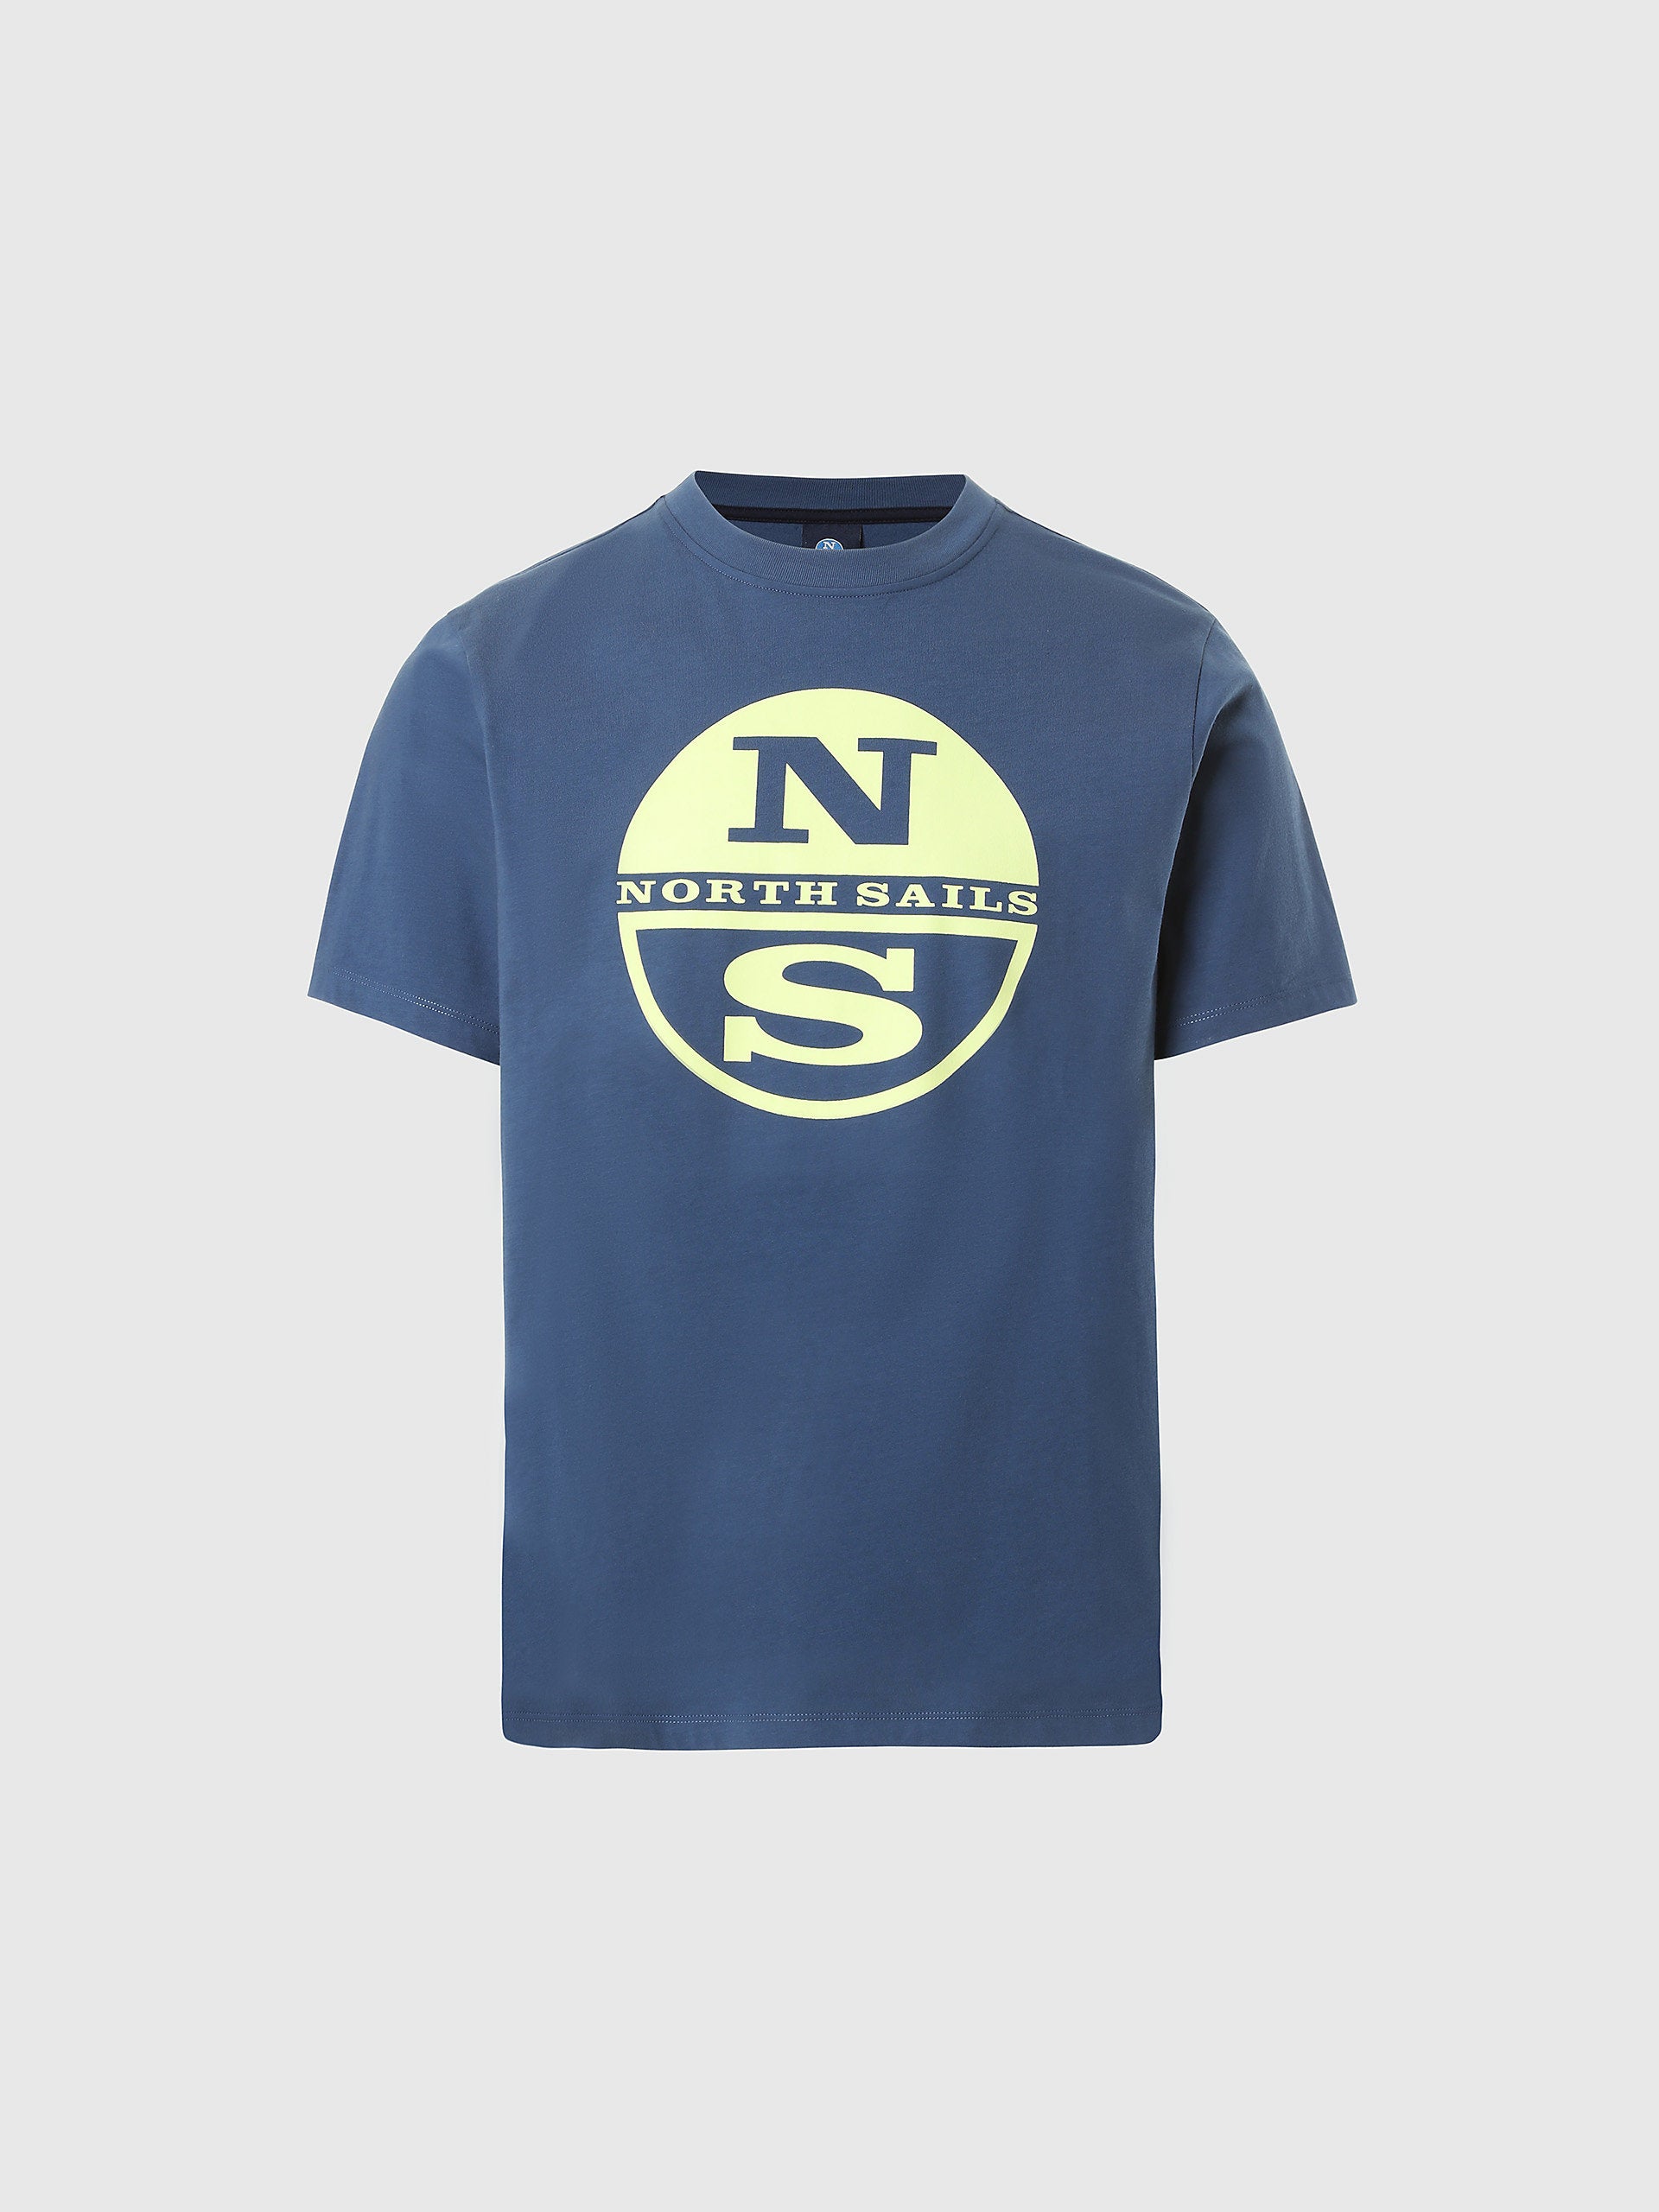 North Sails - T-shirt con stampa maxi logoNorth SailsDark denimM